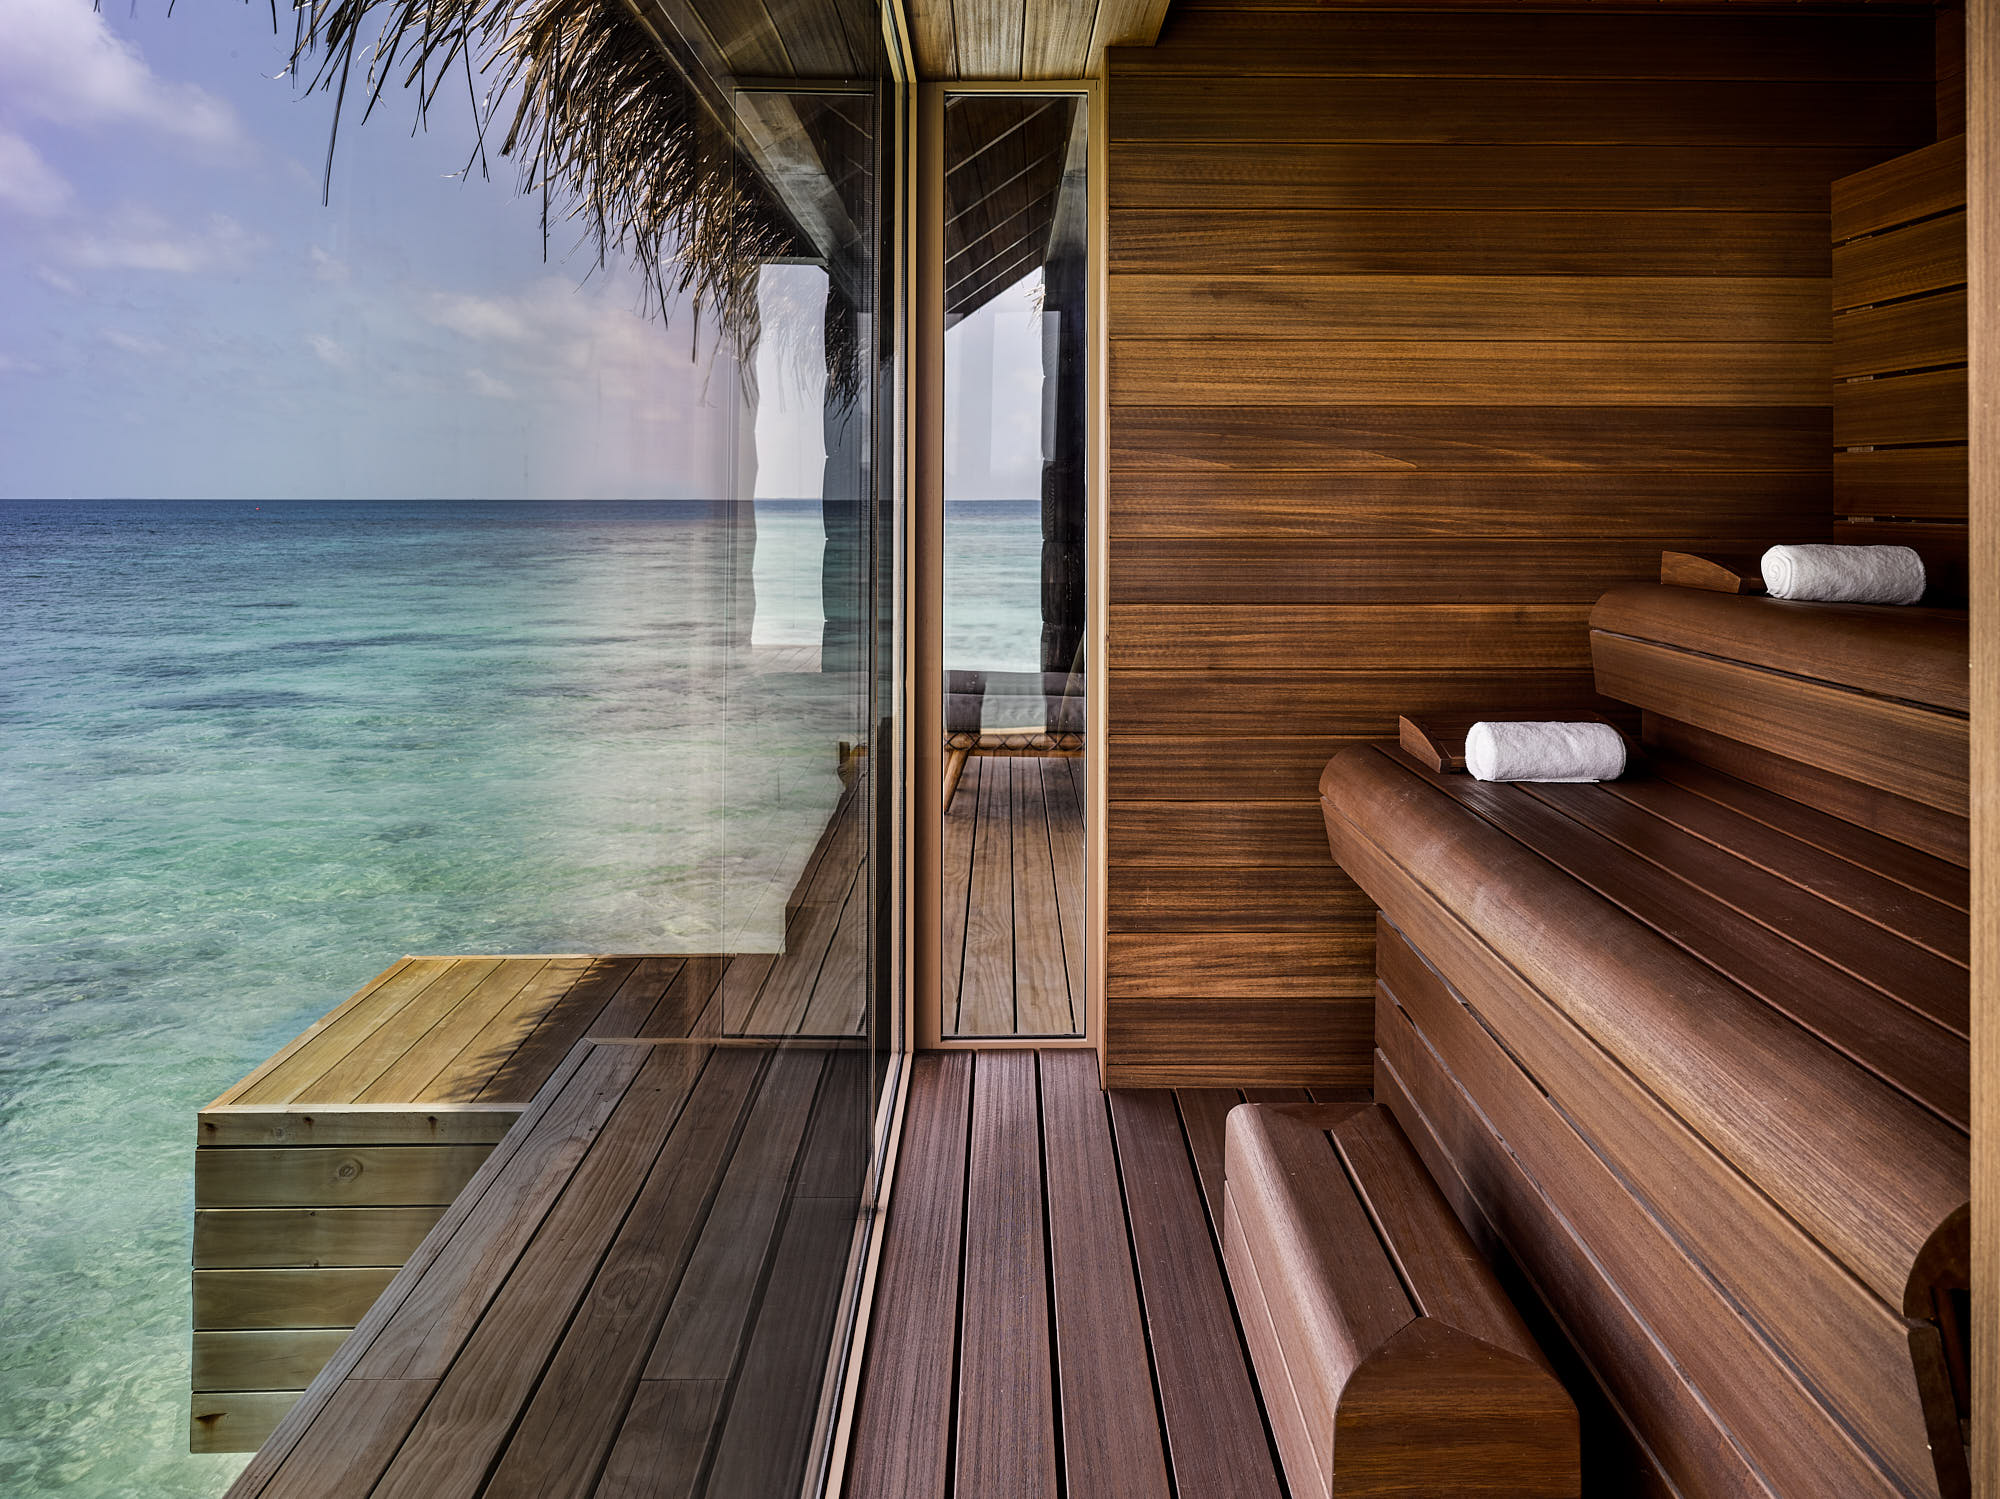 sauna overlooking the beach